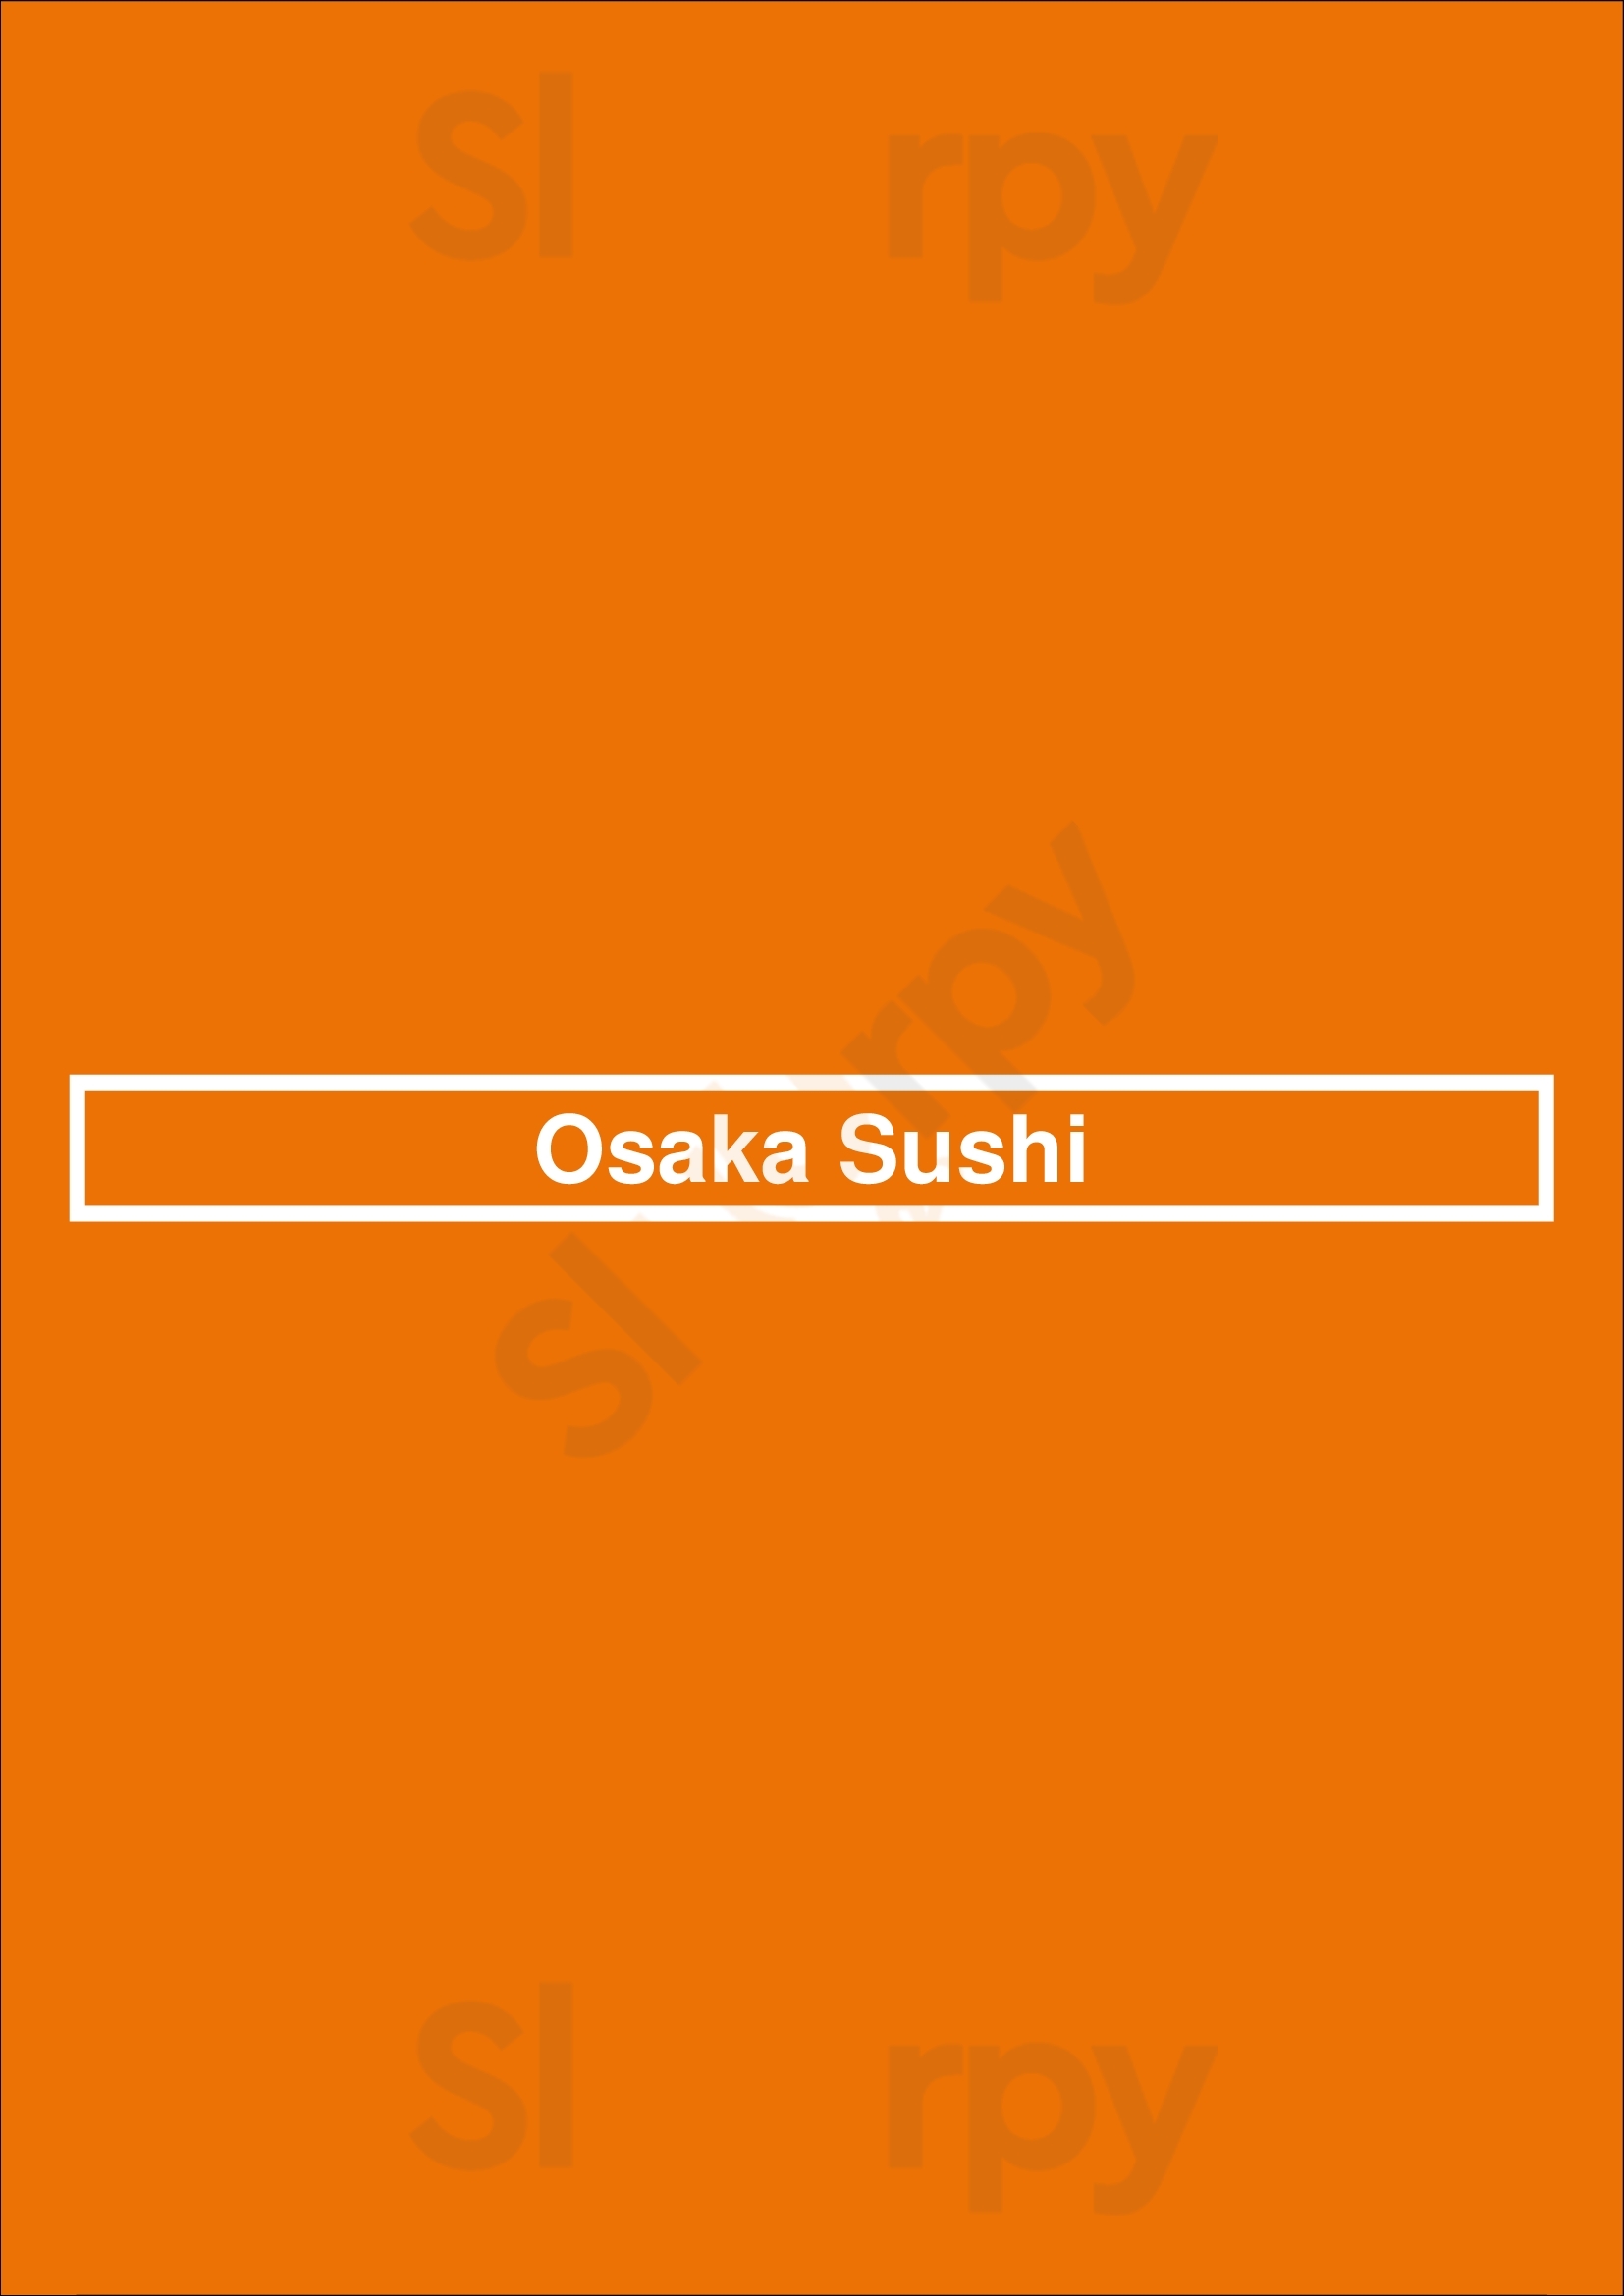 Osaka Sushi & Steak Richmond Menu - 1